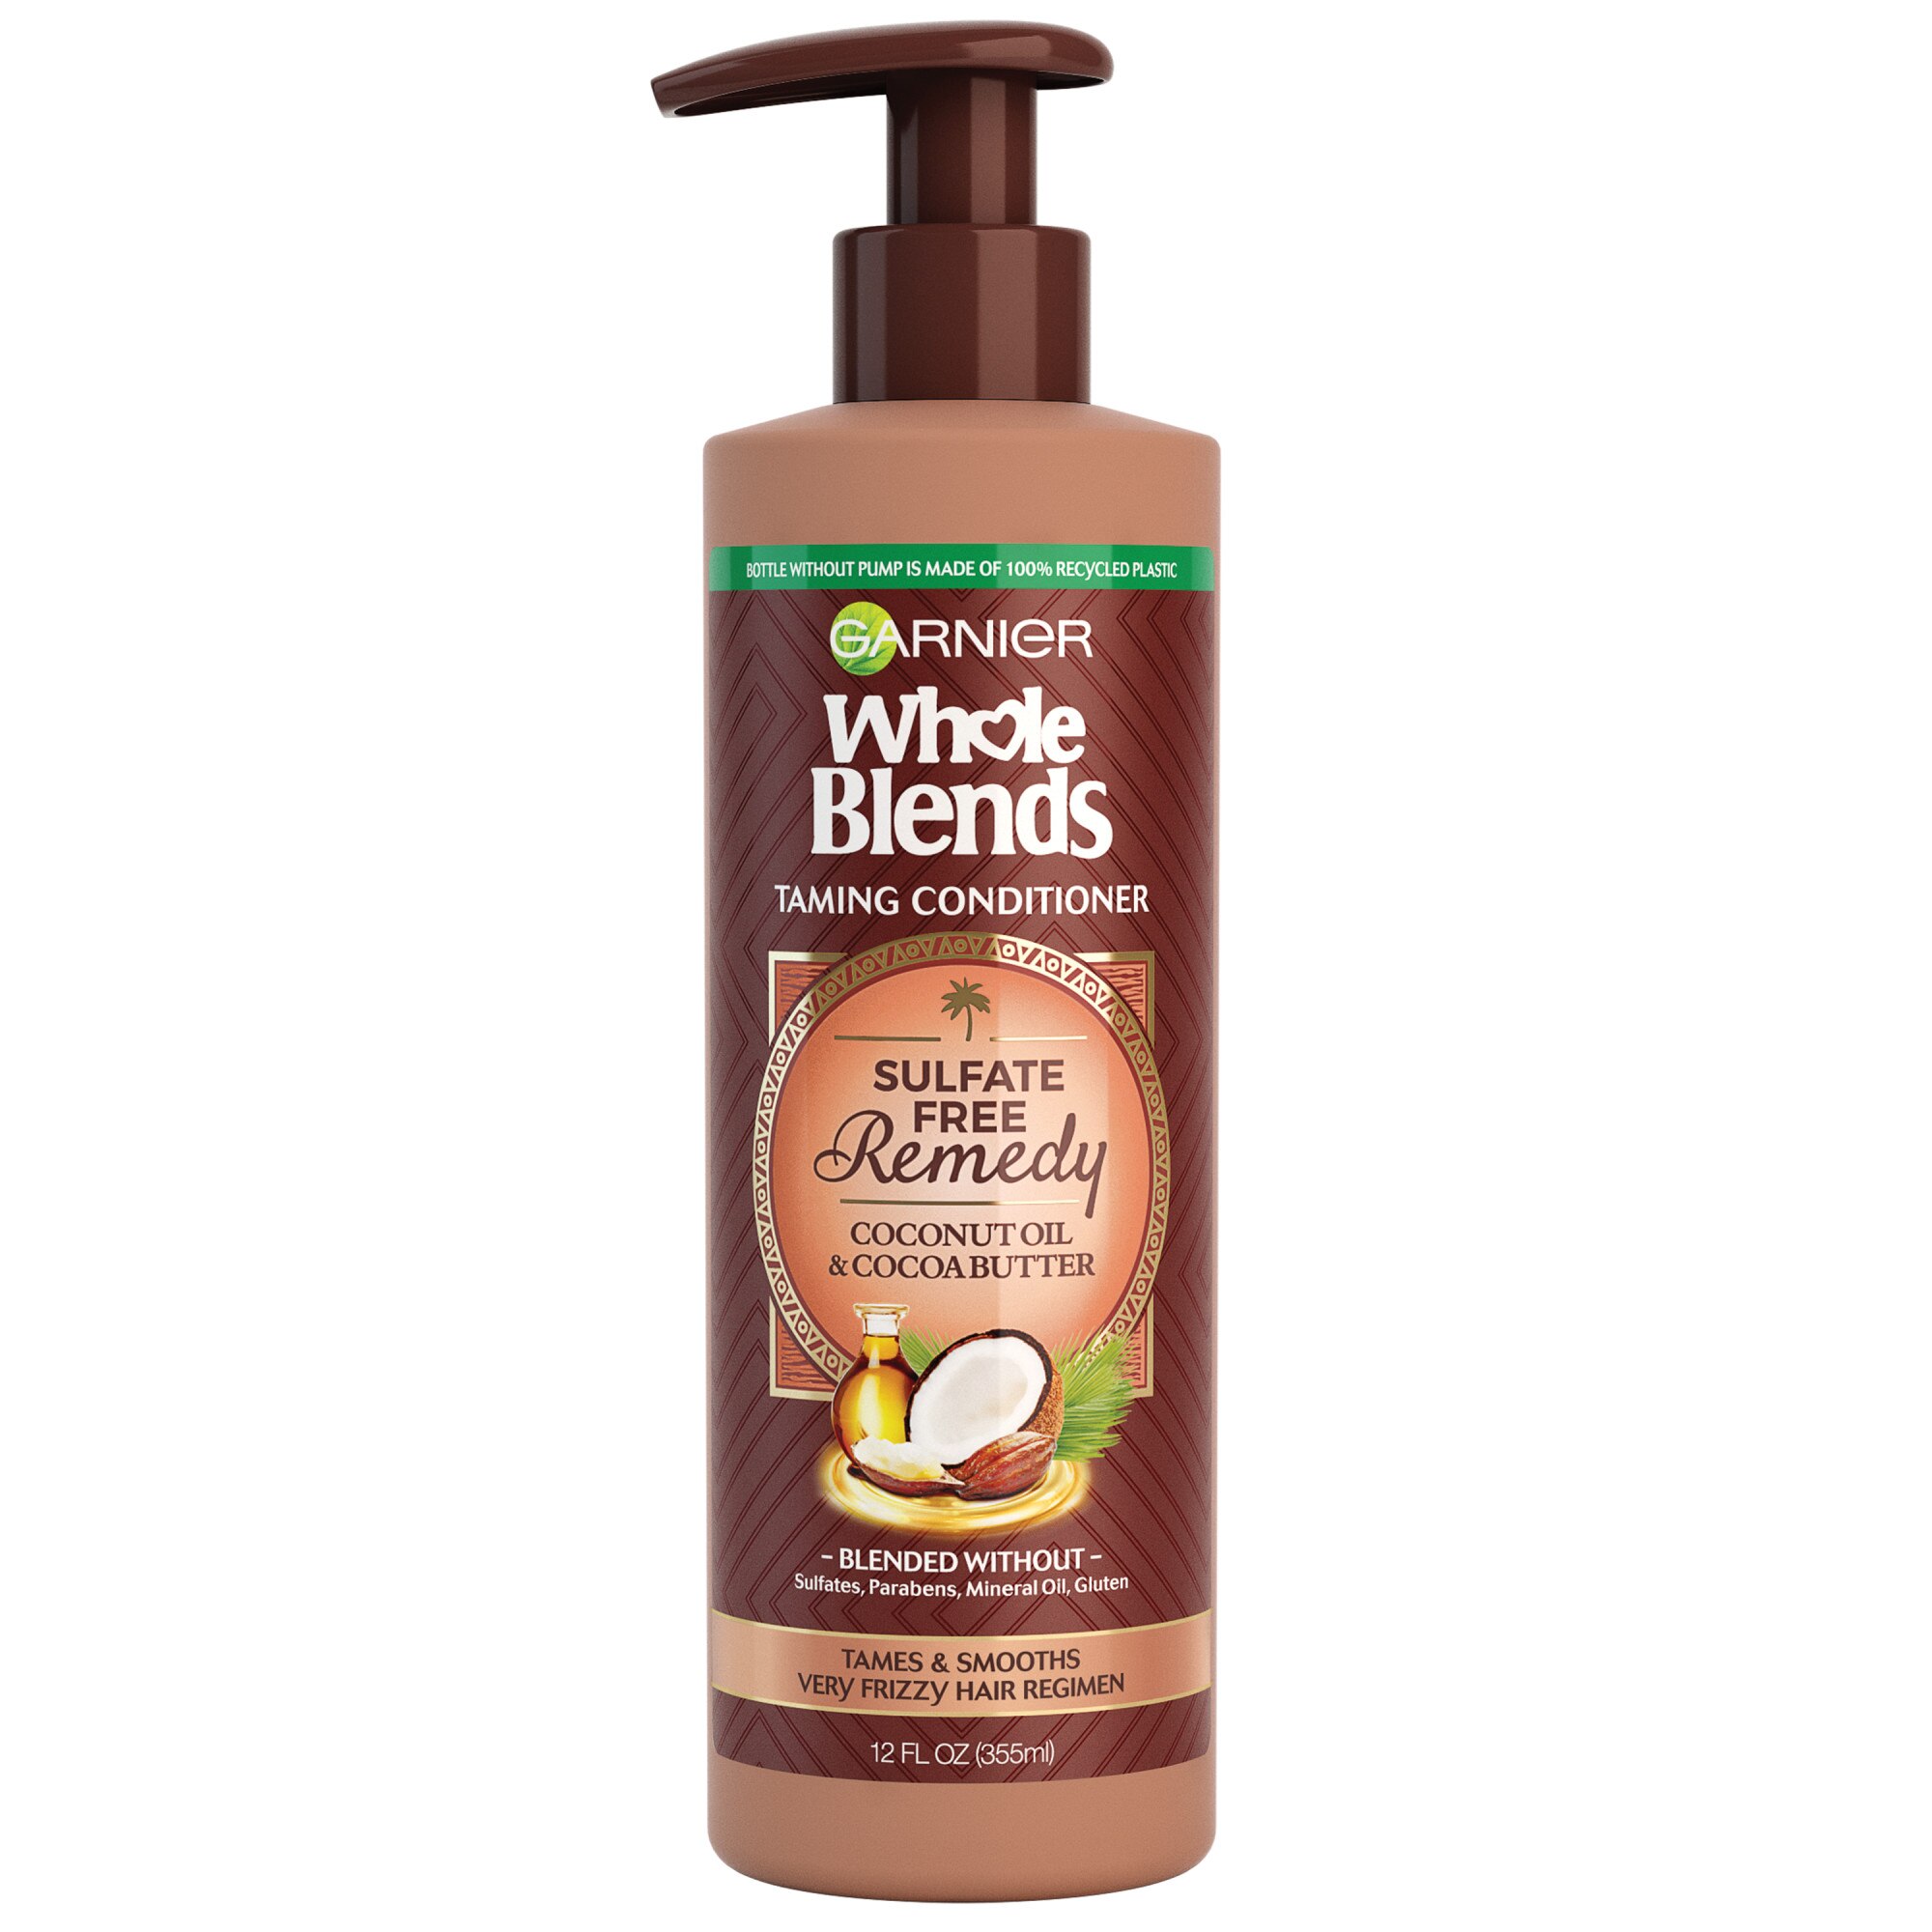 Garnier Whole Blends Sulfate Free Remedy - Acondicionador para cabello encrespado, Coconut Oil, 12 oz